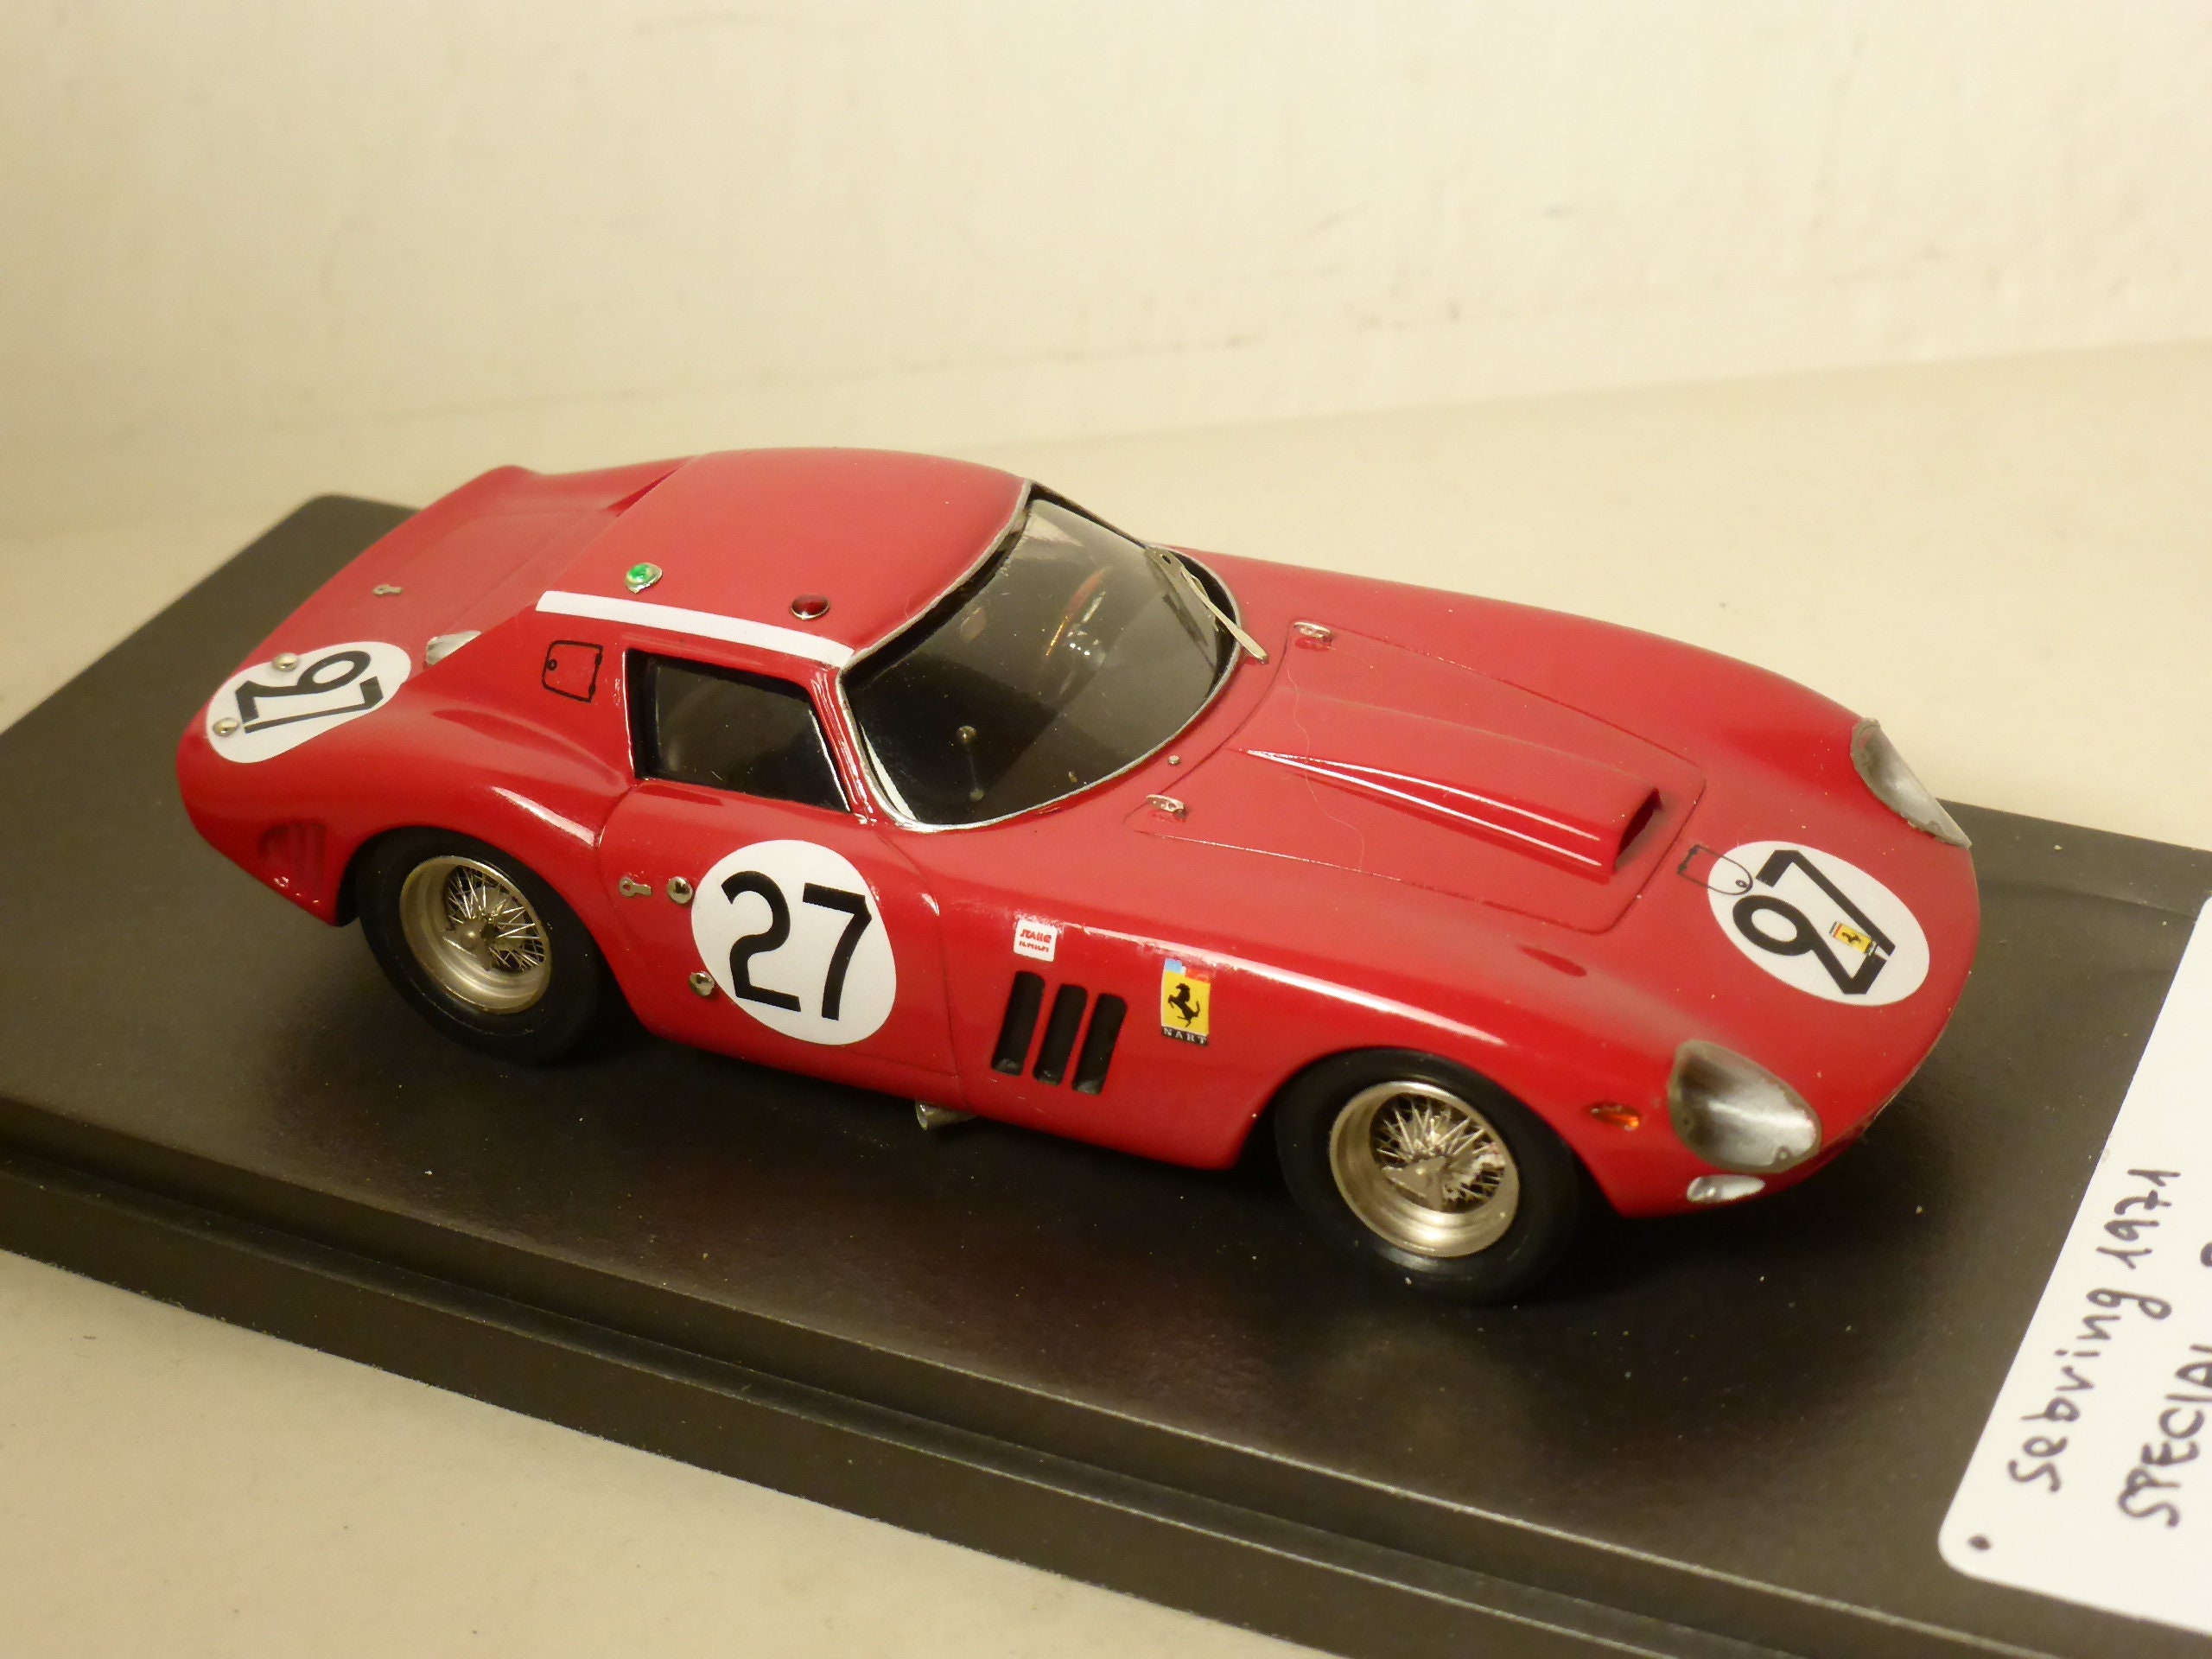 Ferrari 250 Gto 64 5573gt Nart Le Mans 1964 27 Grossman Tavano 1 43 Built By Sebring1971 Studio 23 2018